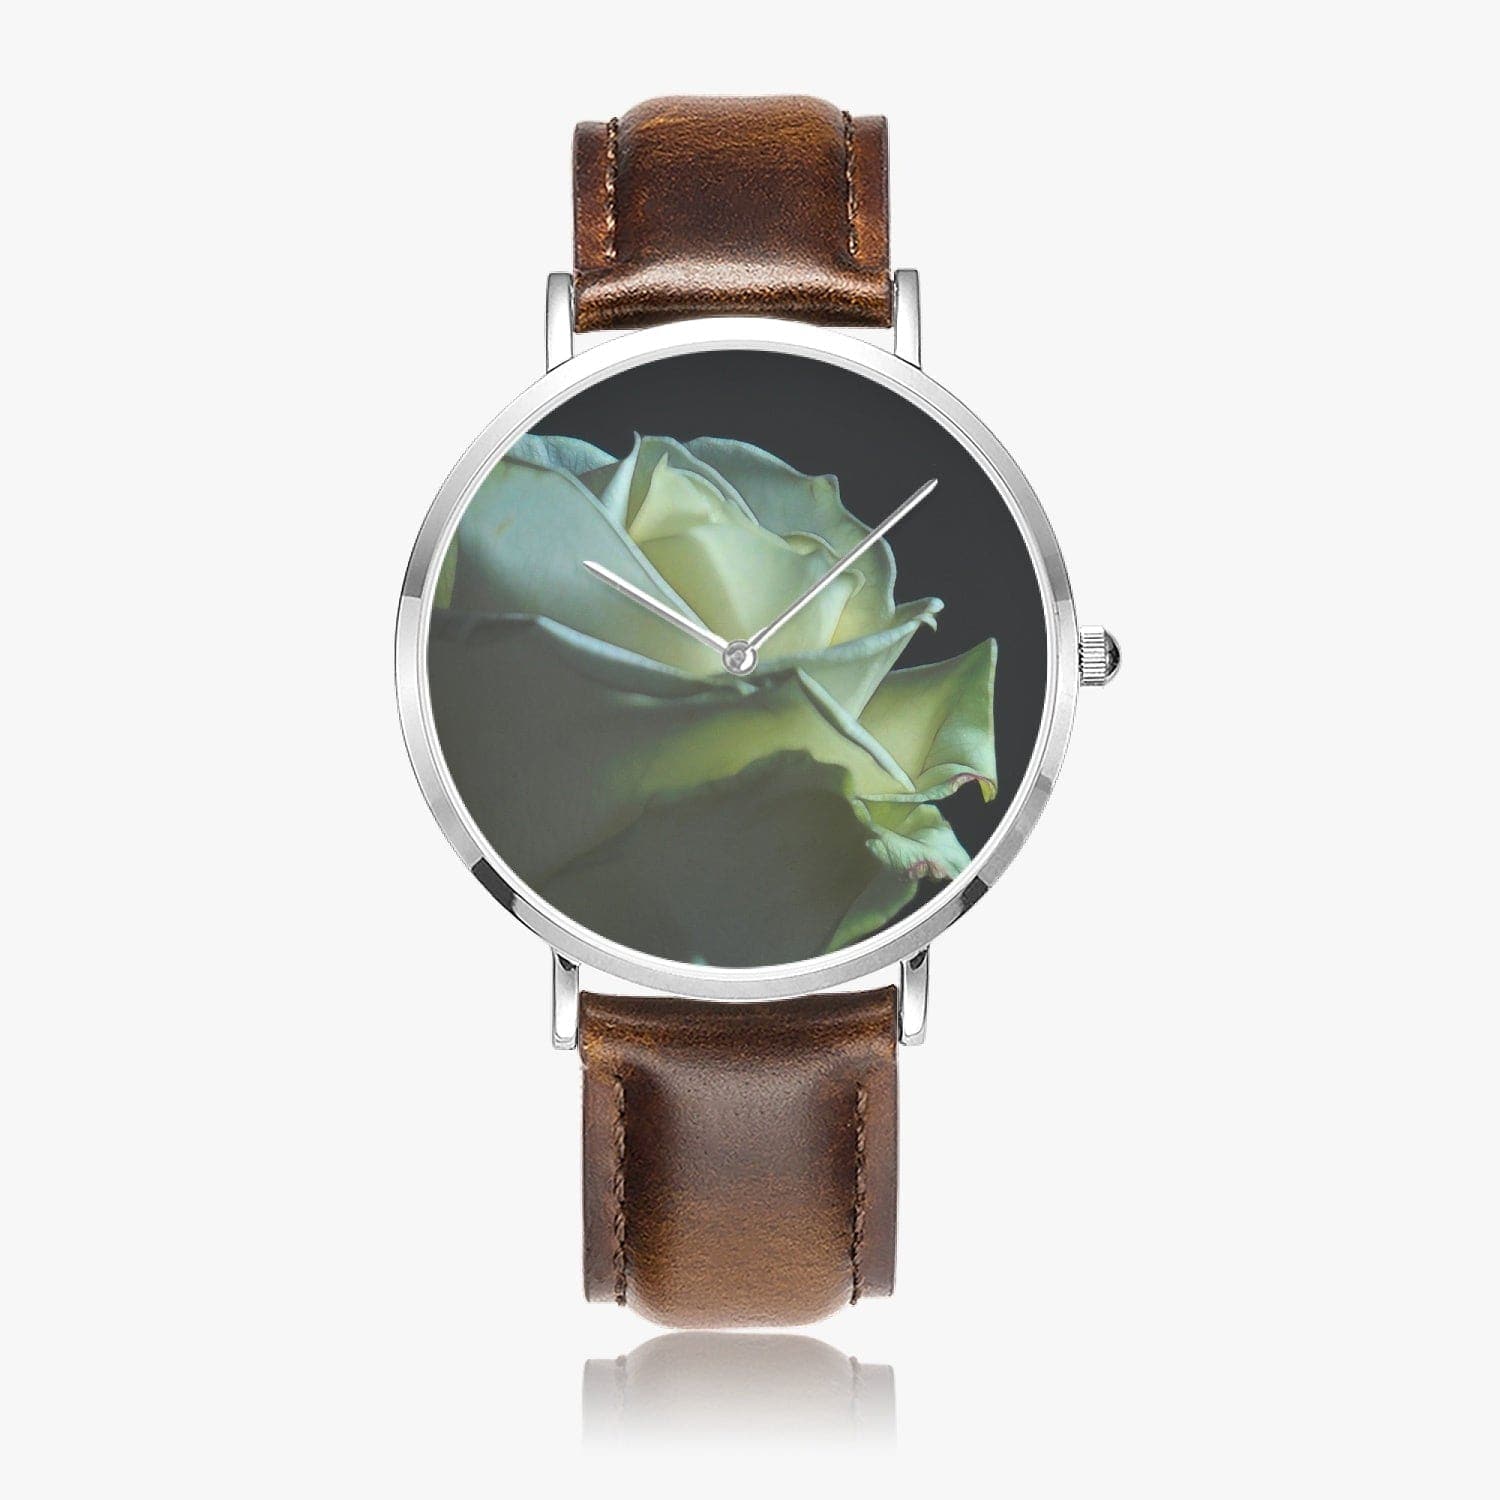 Tender white rose. Hot Selling Ultra-Thin Leather Strap Quartz Watch (Silver), Designer watch by Sensus Studio Design